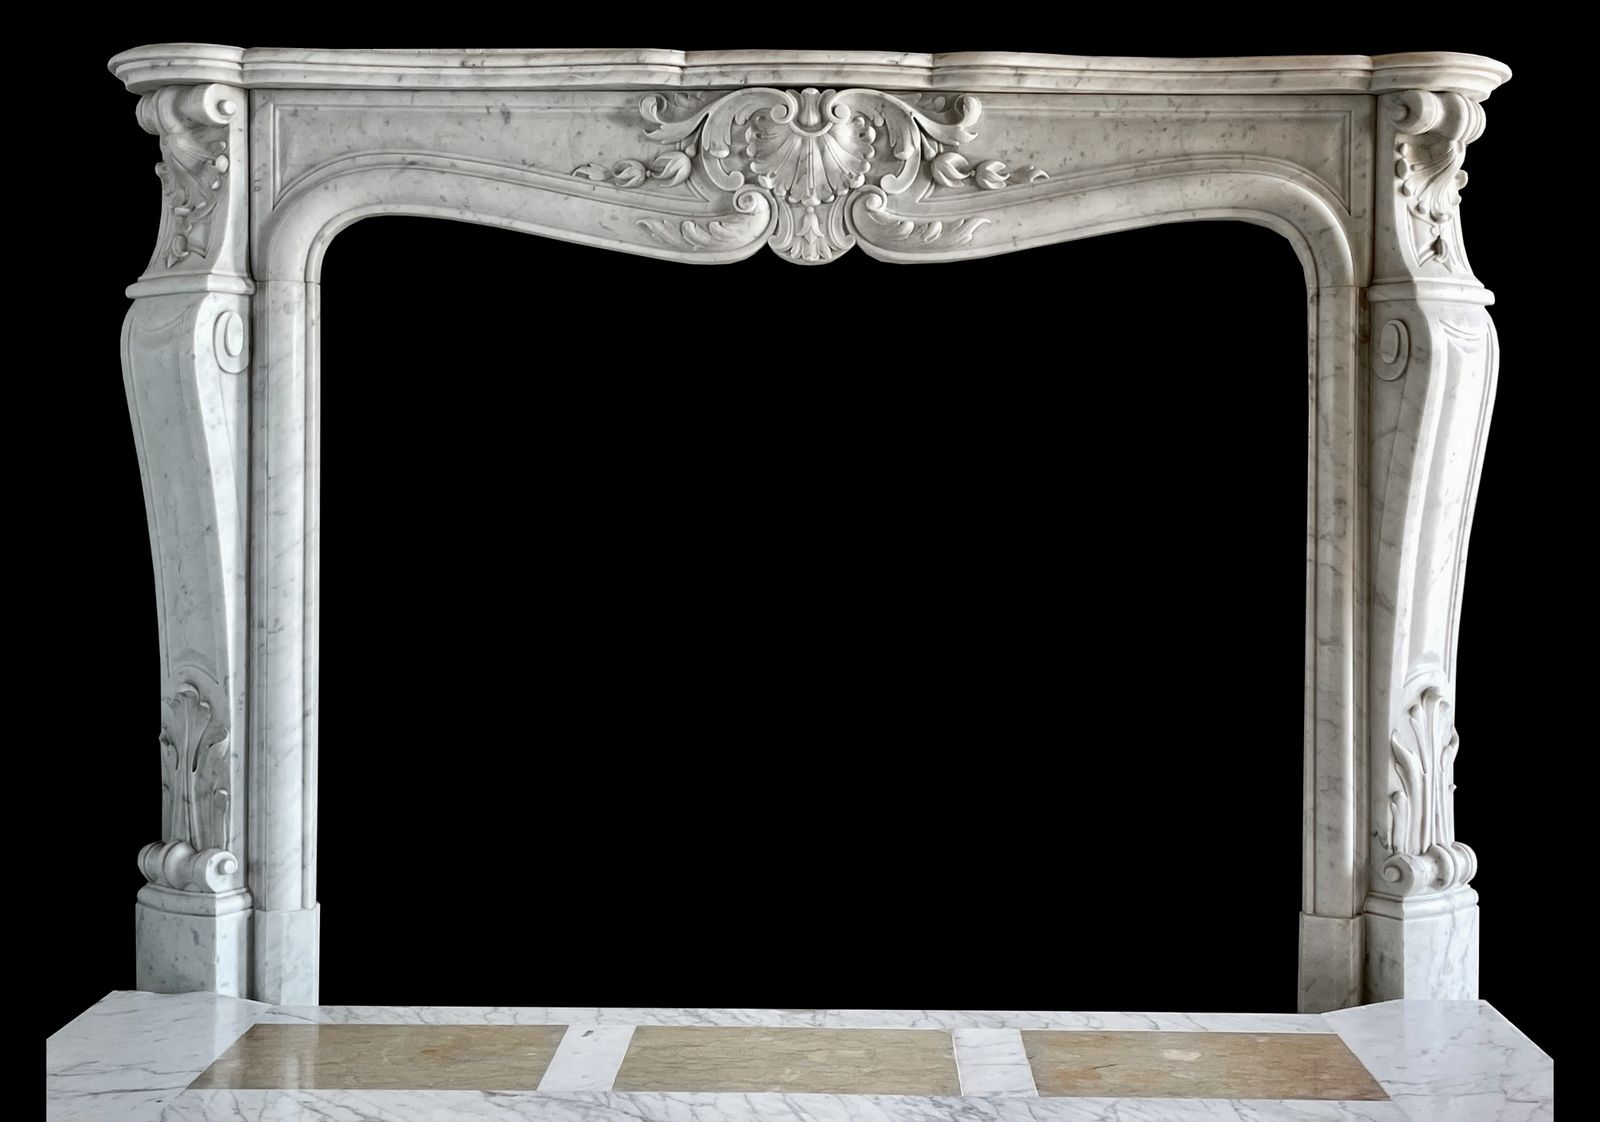 Null 路易15风格的壁炉。

弩形壁炉上装饰有棕榈叶，控制台门框上装饰有直立的刺桐叶和罗盖尔。

19世纪晚期。

白色卡拉拉大理石。

高度105厘米 -&hellip;